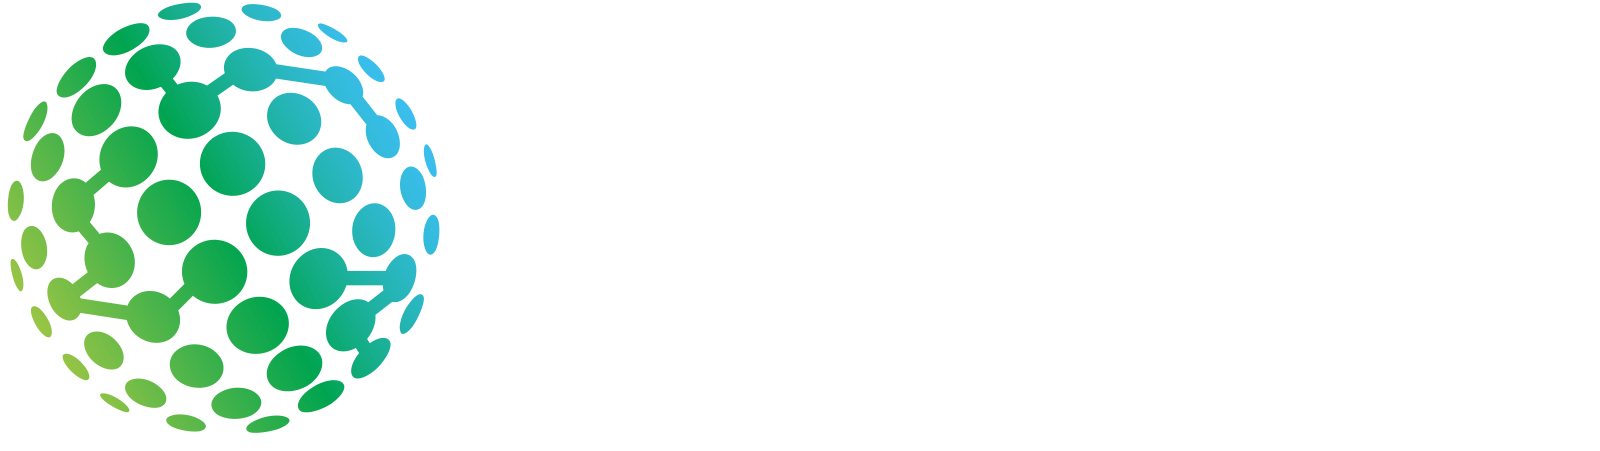 Carbon and ESG Strategies logo